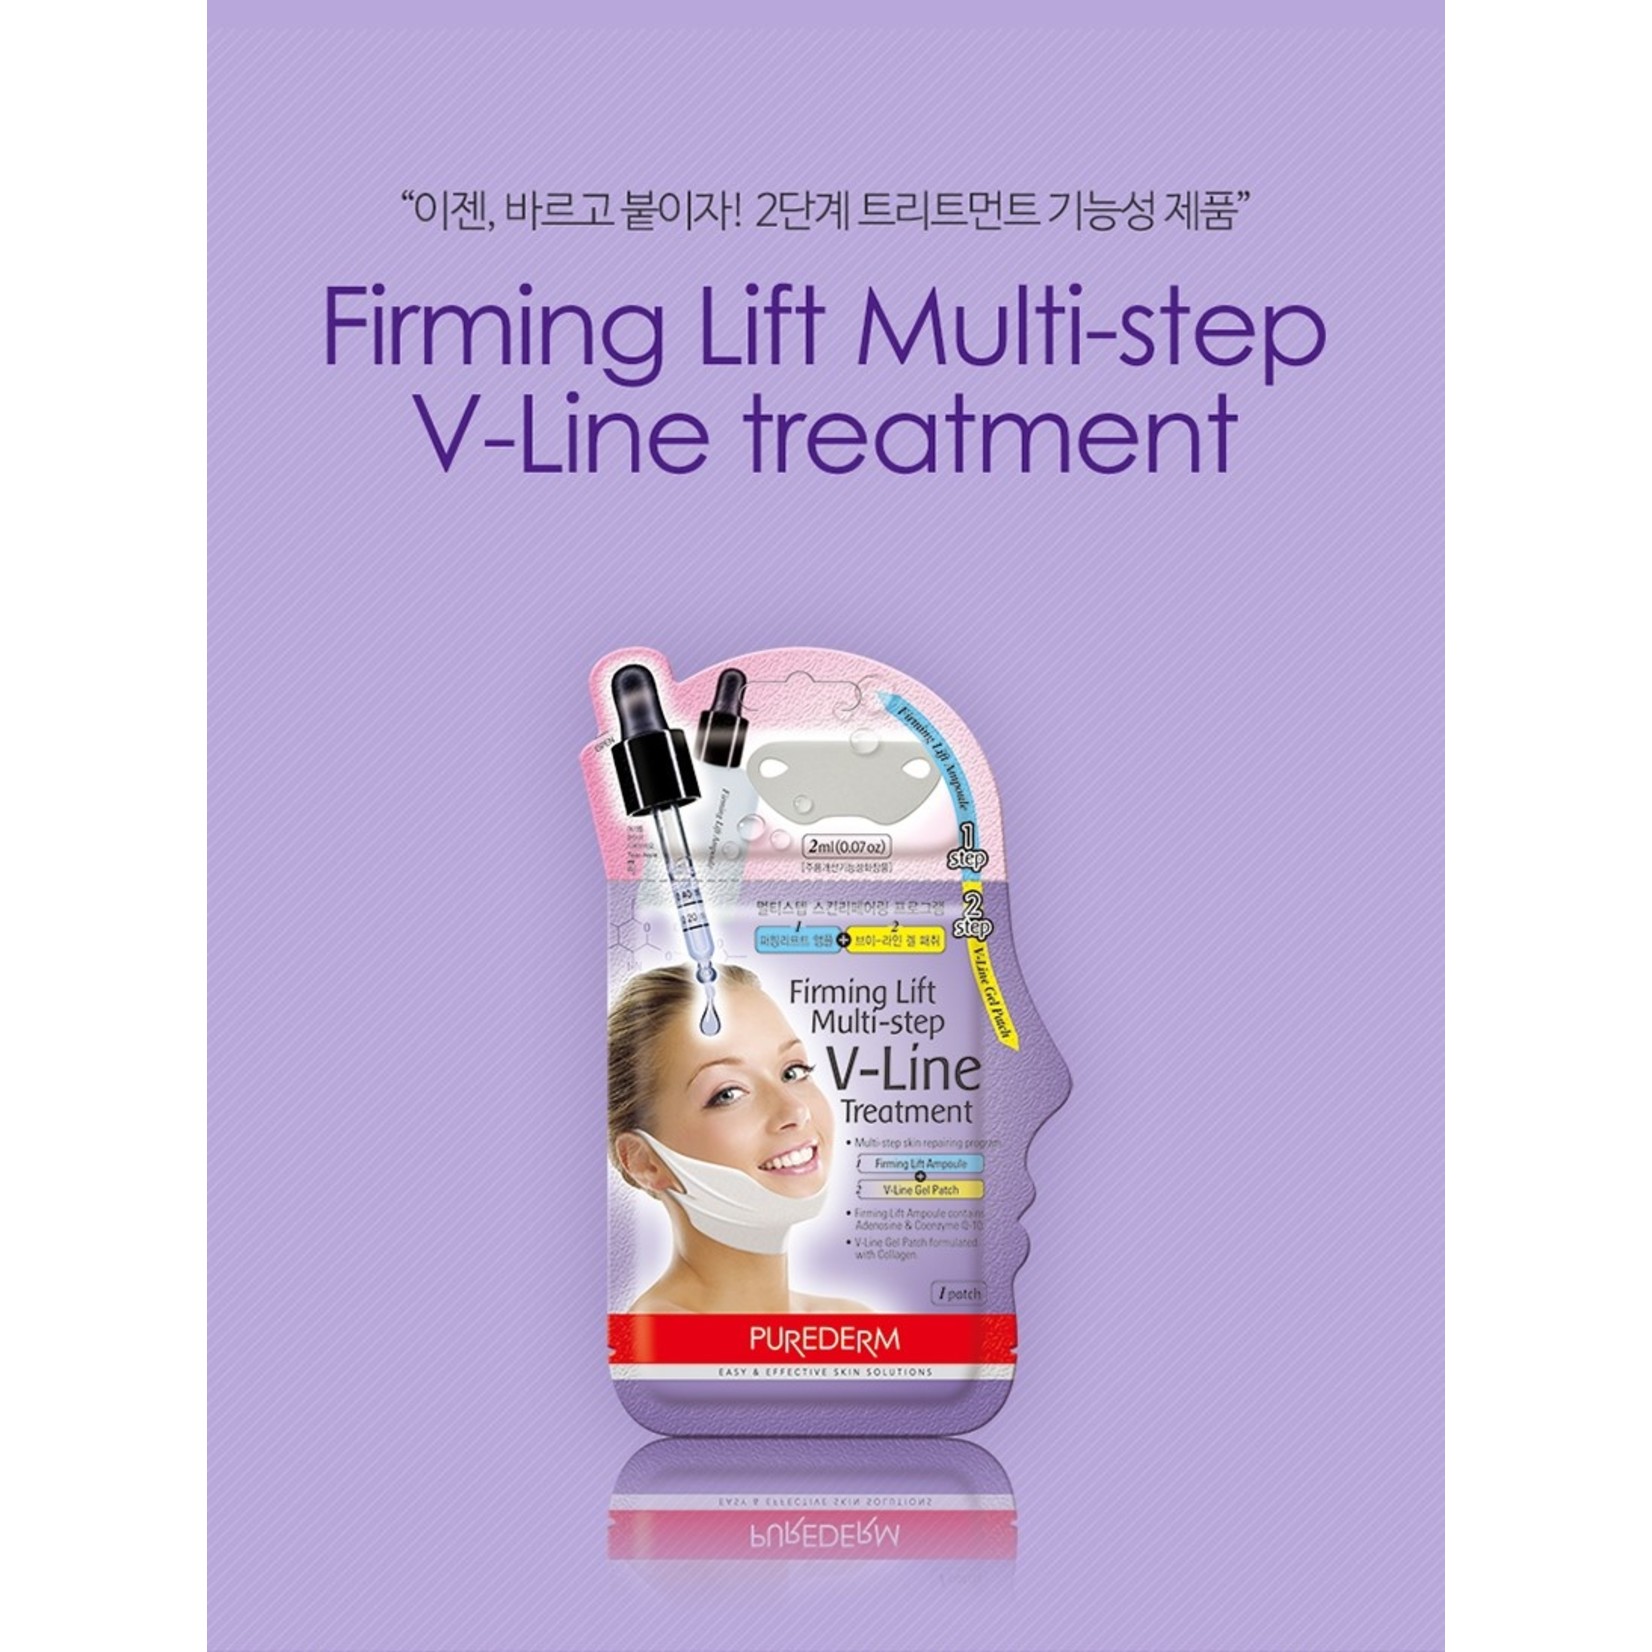 PUREDERM Firming Lift Multi-step V-Line Treatment